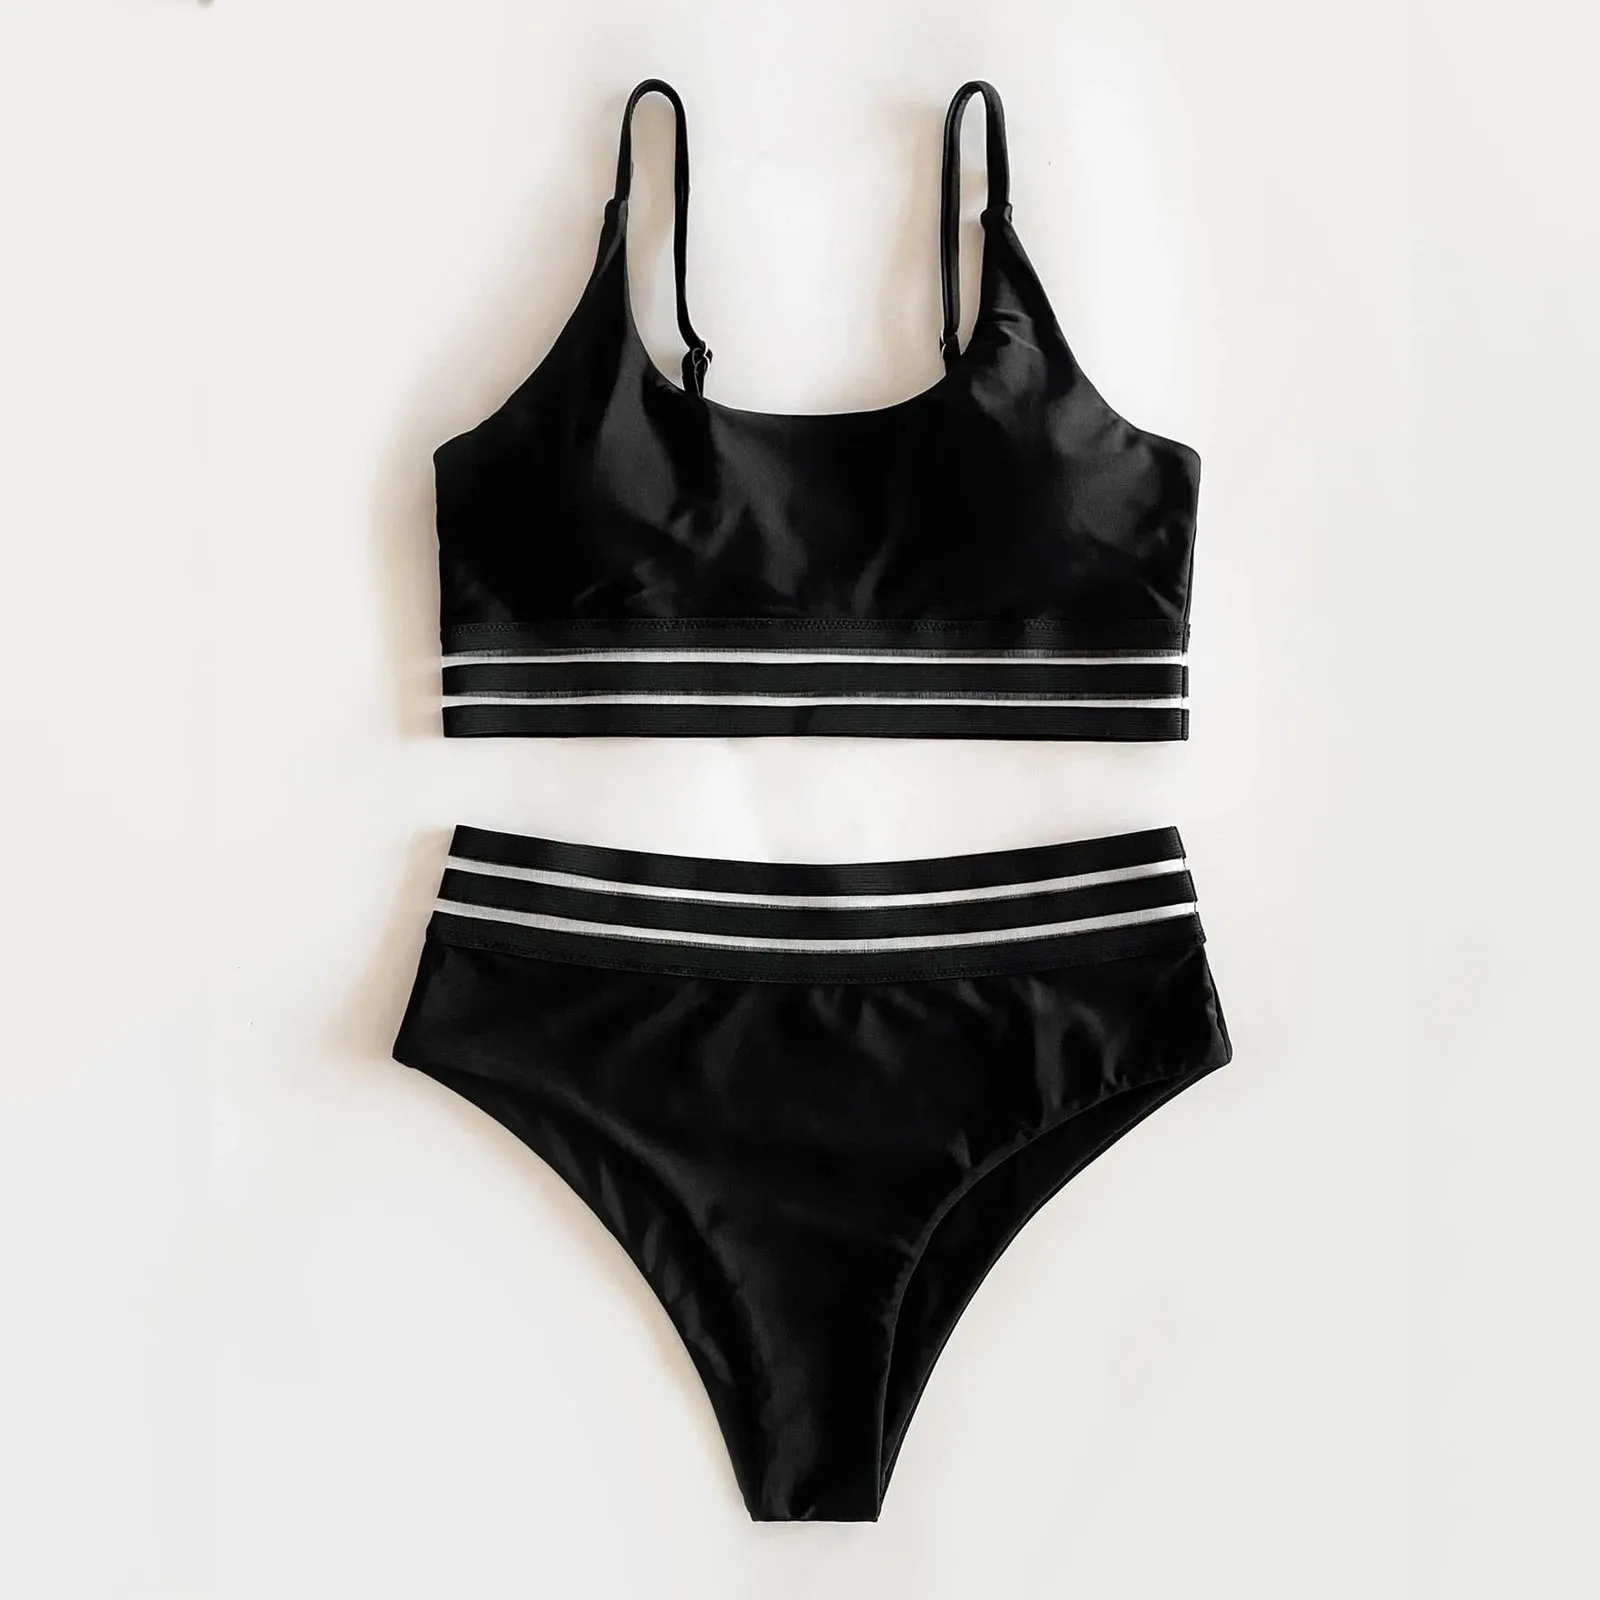 GRT Fitness H9700a8a70b4946fbbf19c3b0f3c4e22eY Black Bikinis High Waist Bikini Hot Sale Mesh Lace Sexy Swimsuit Summer Female Swimwear Women Bathing Suit 